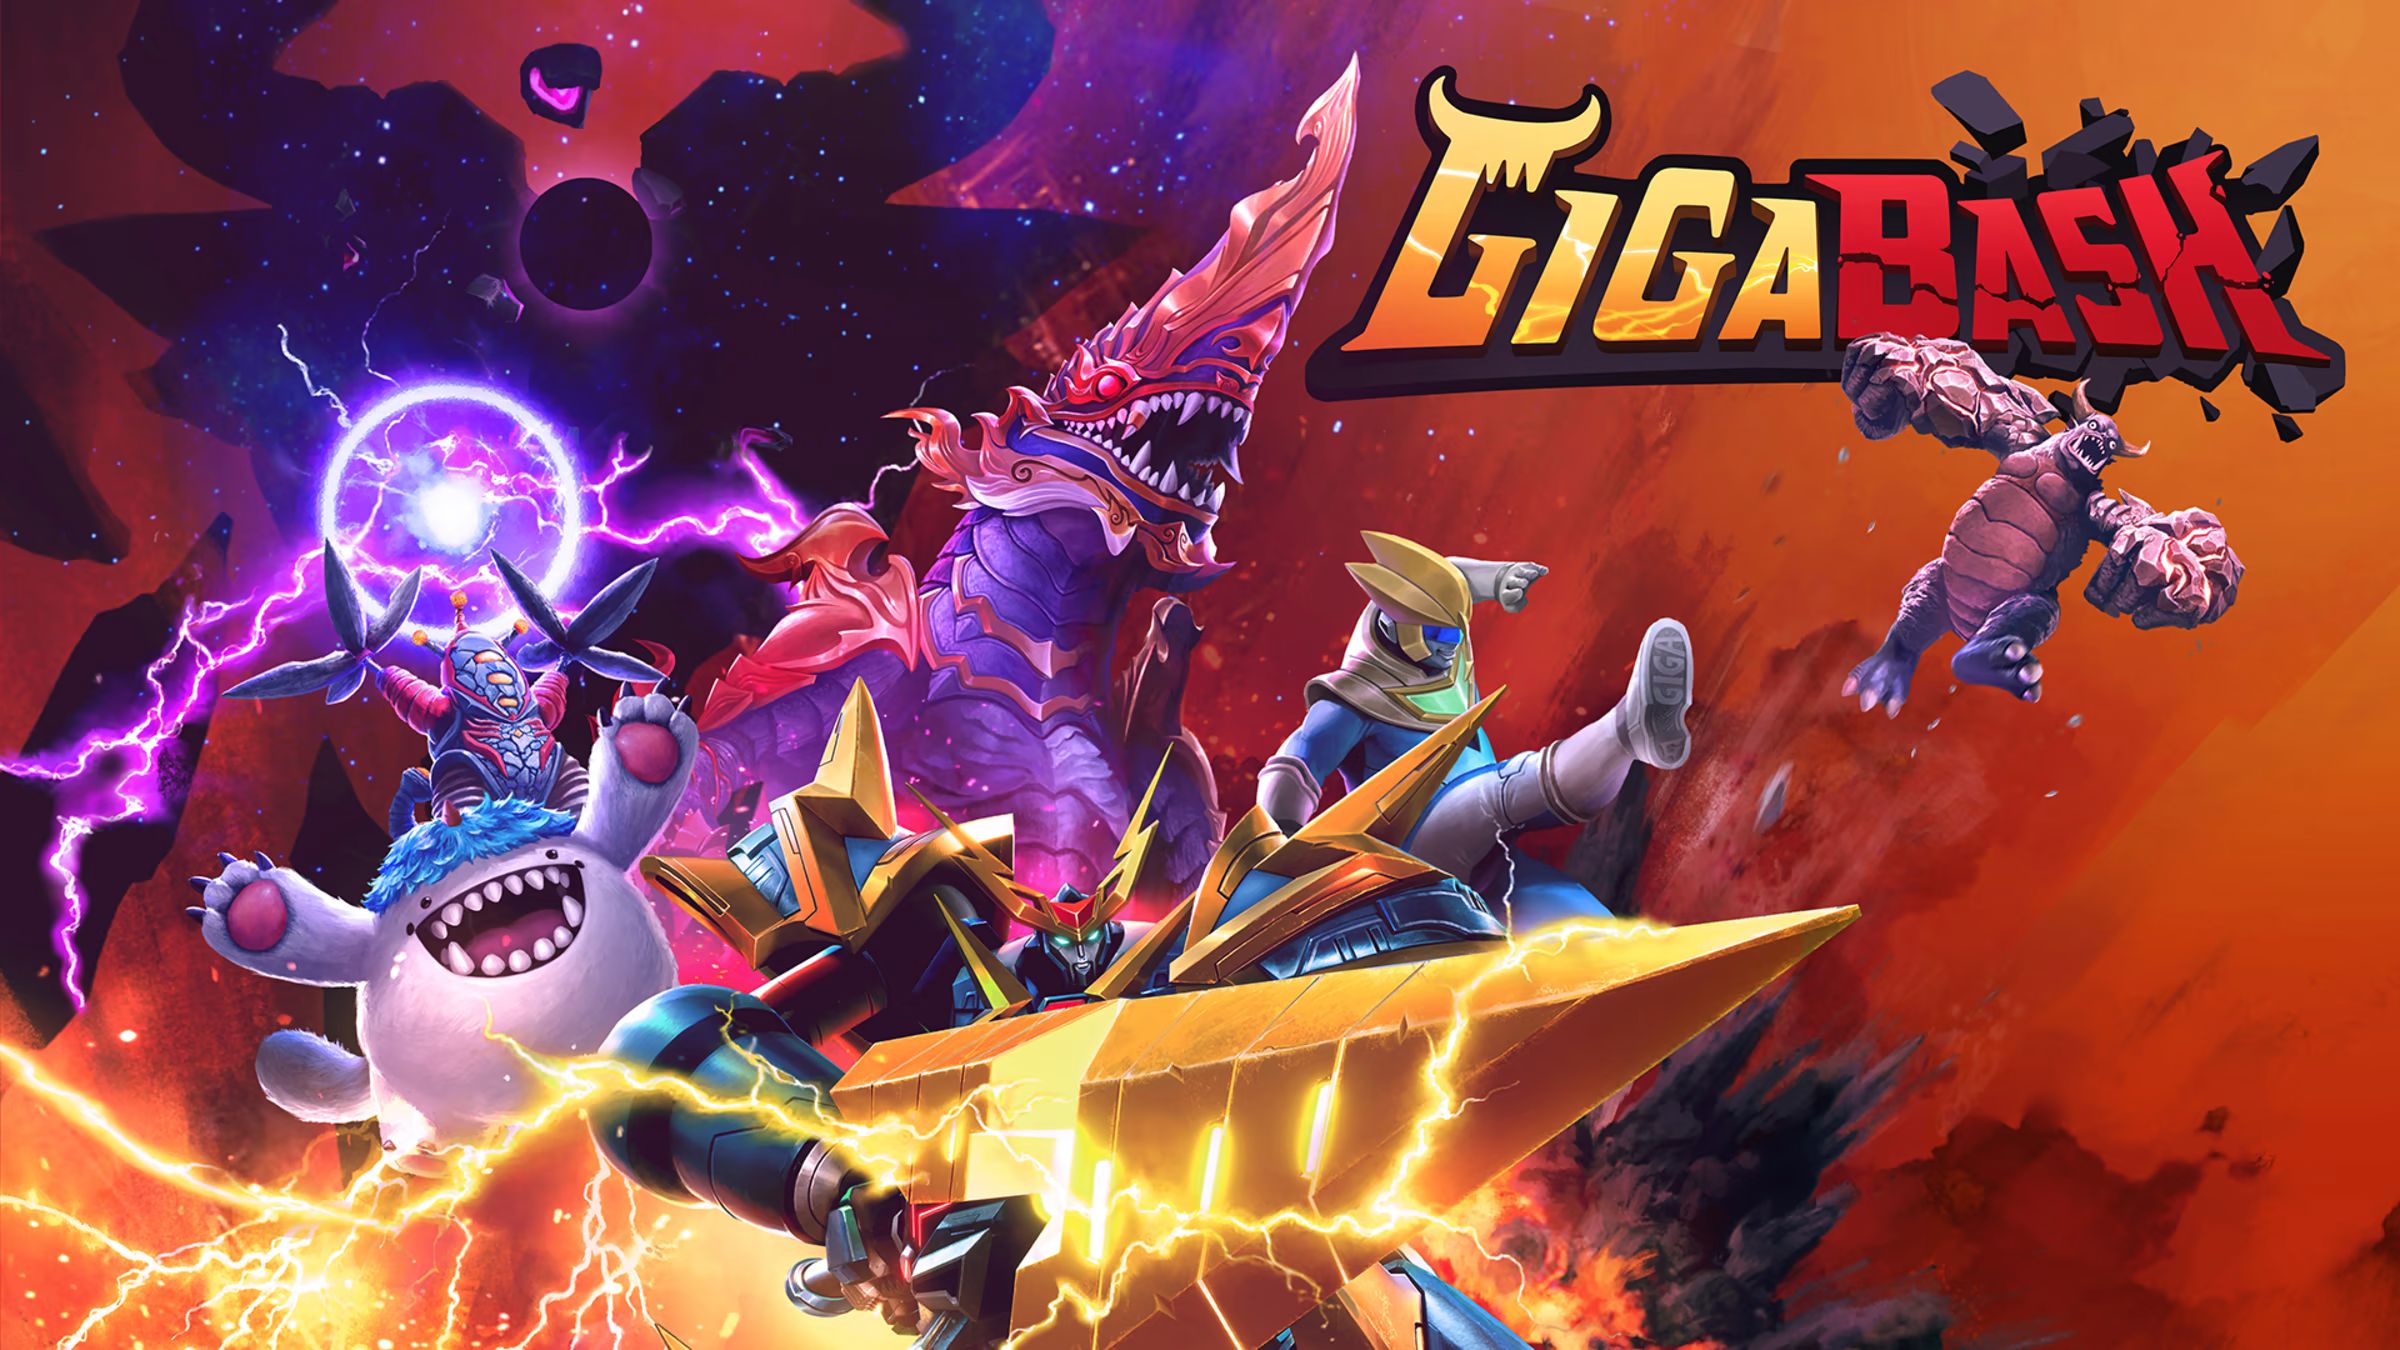 FREE GAME: GigaBash is Free at Epic Games